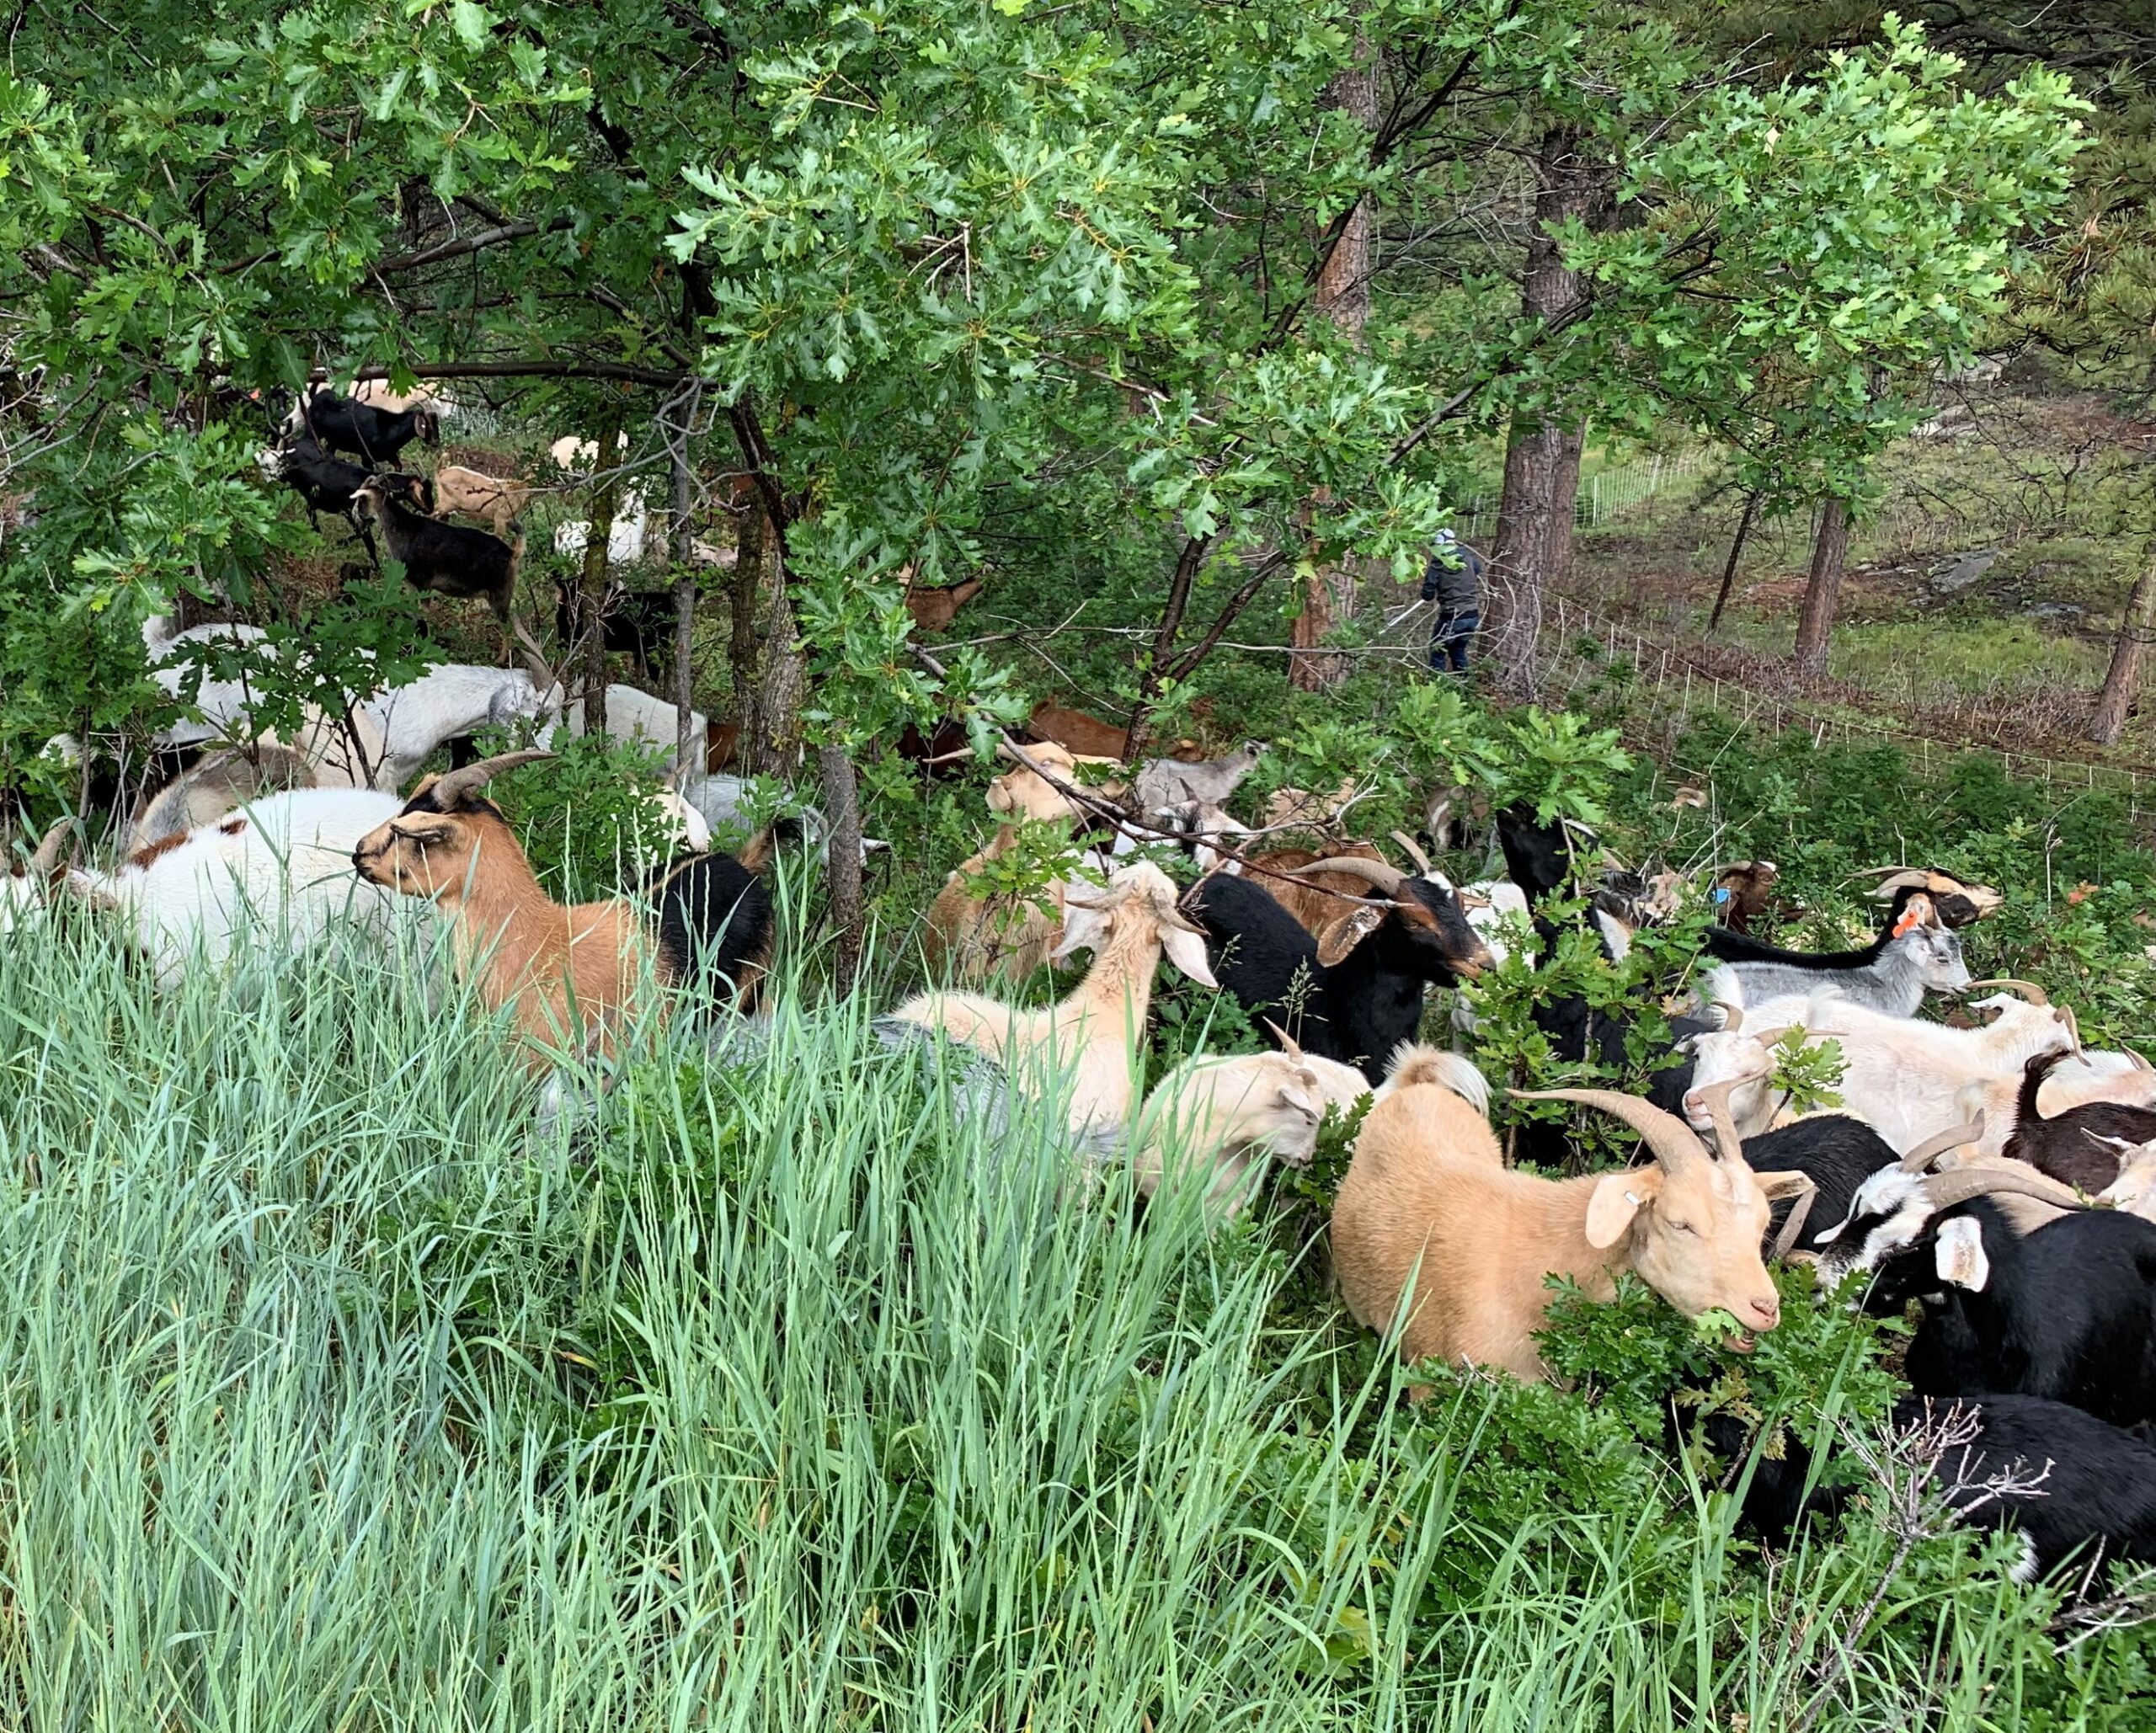 Goats grazing on vegetation